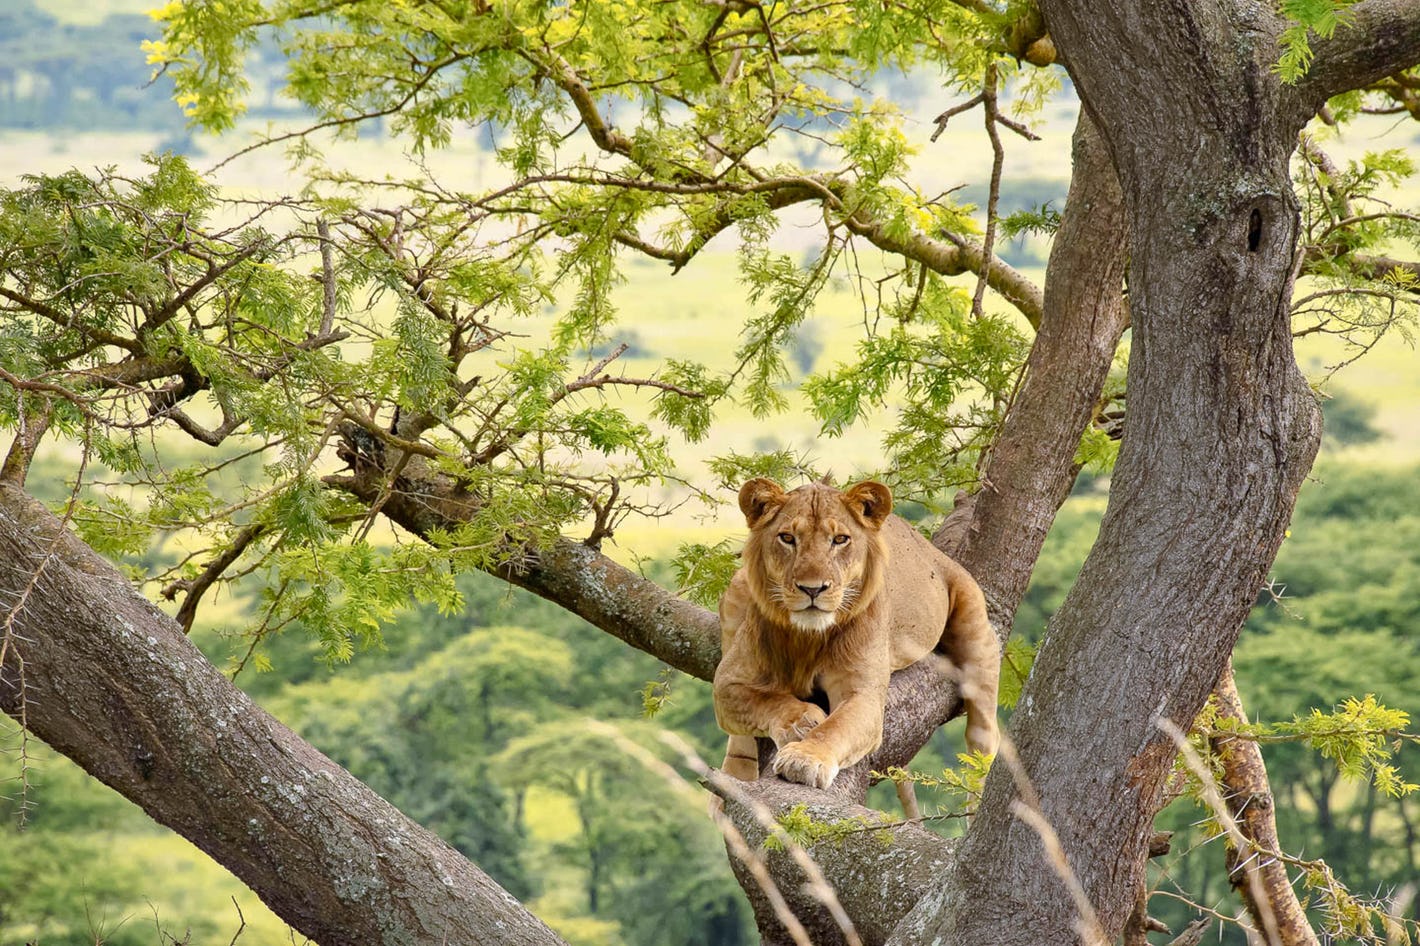 Interesting attractions on a Uganda Safari